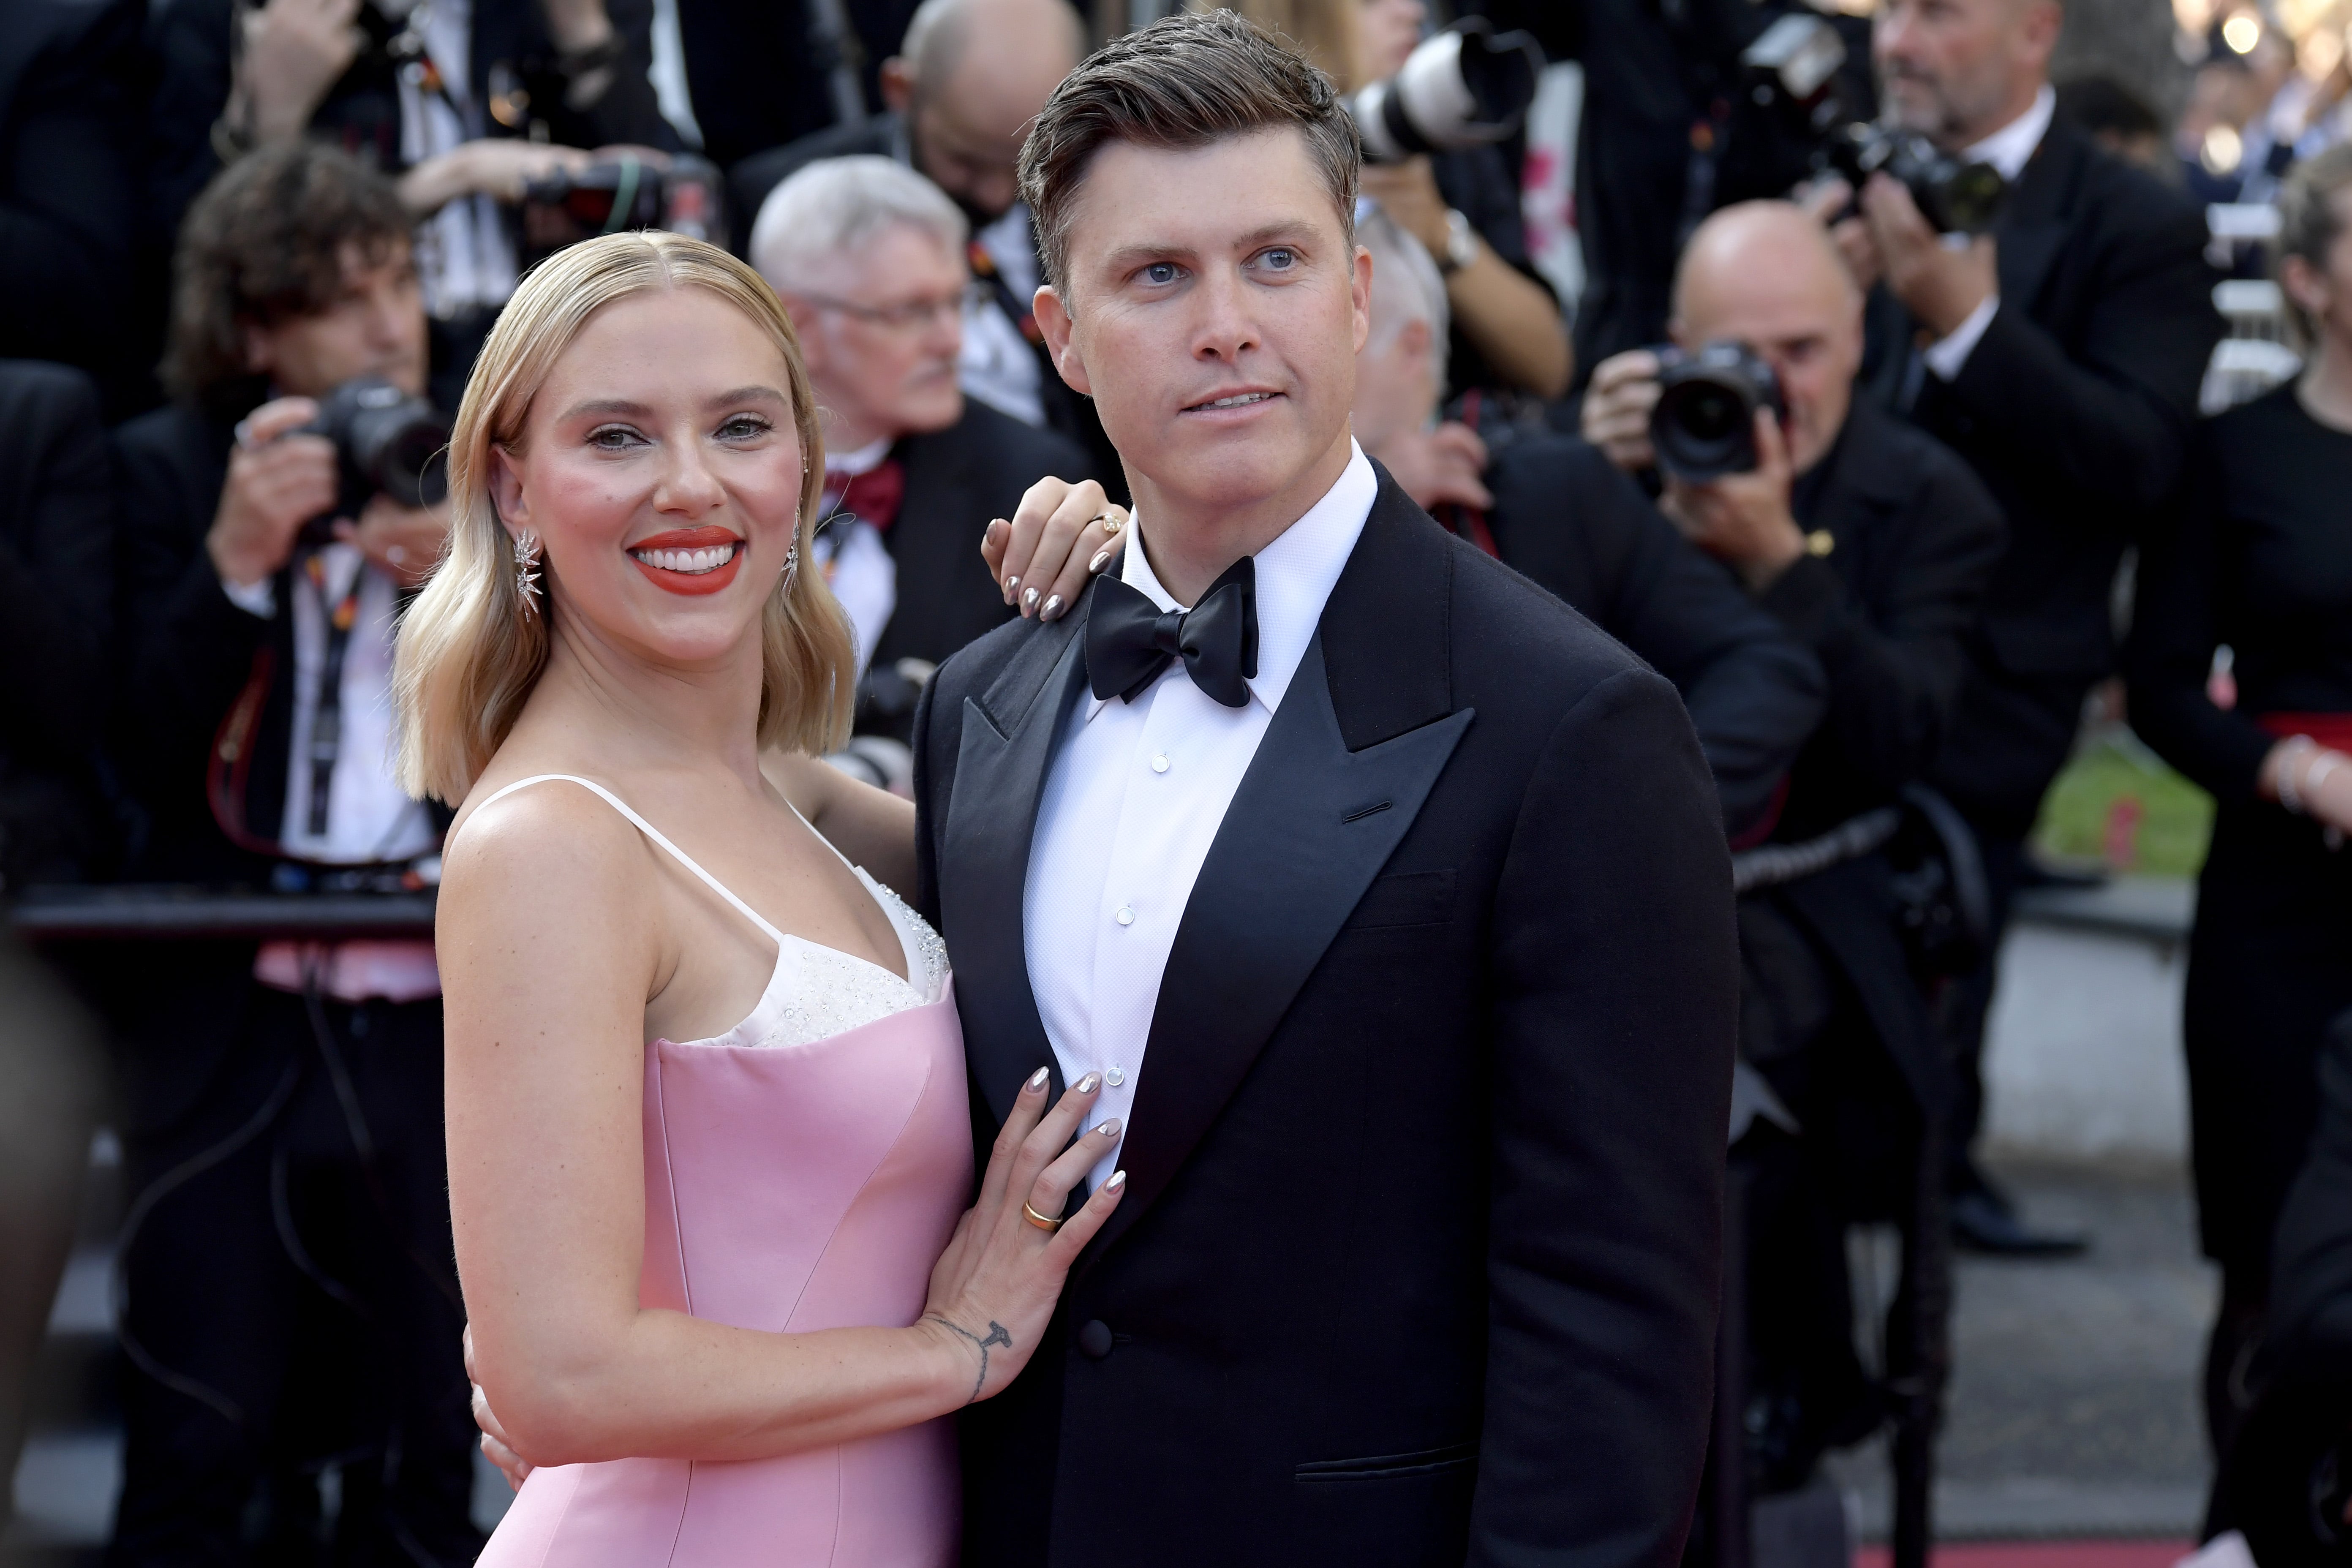 How Many Kids Does Scarlett Johansson Have?